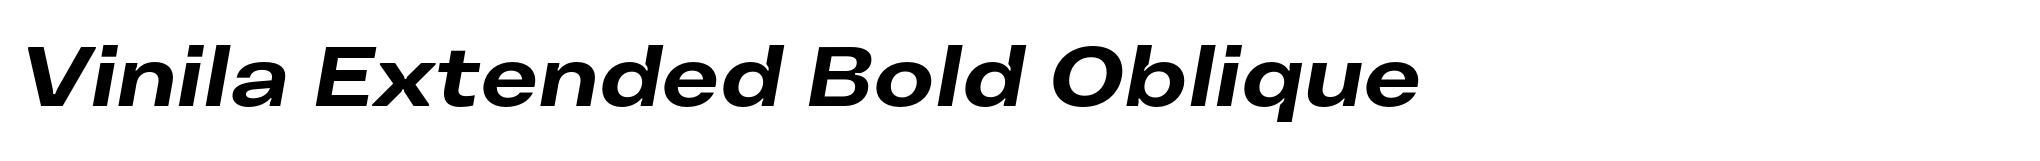 Vinila Extended Bold Oblique image